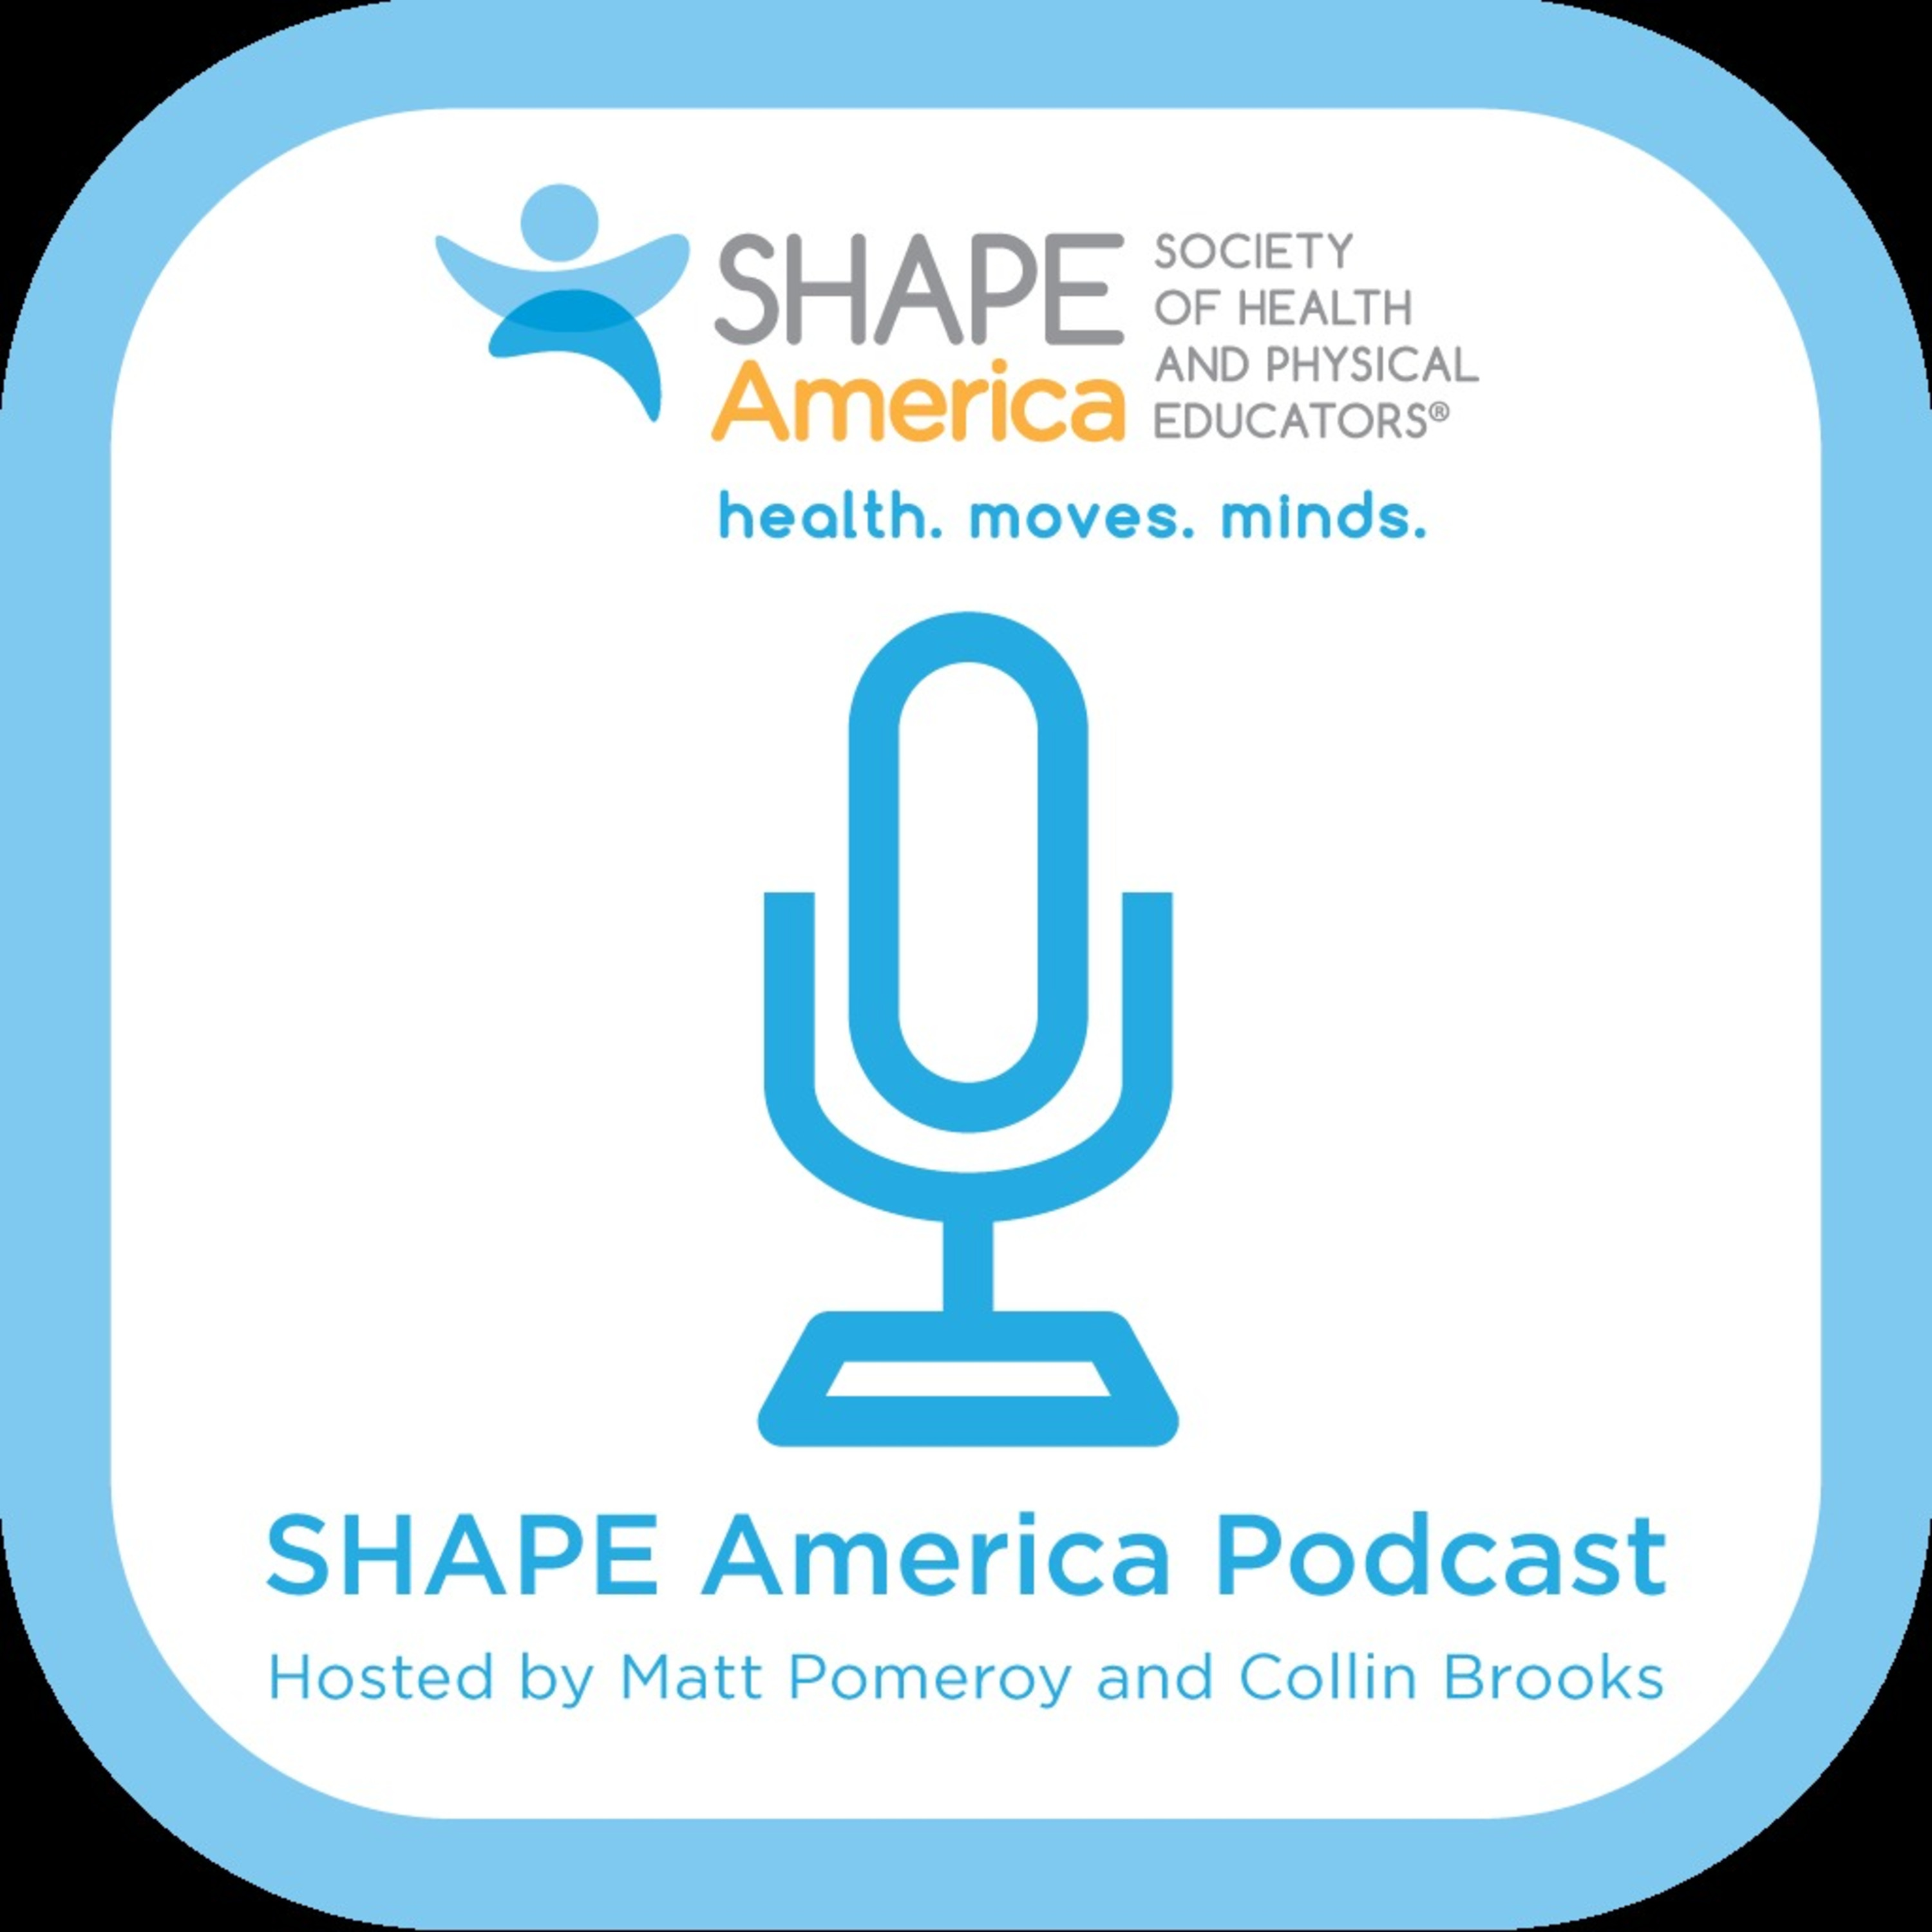 shape-america-s-podcast-professional-development-for-health